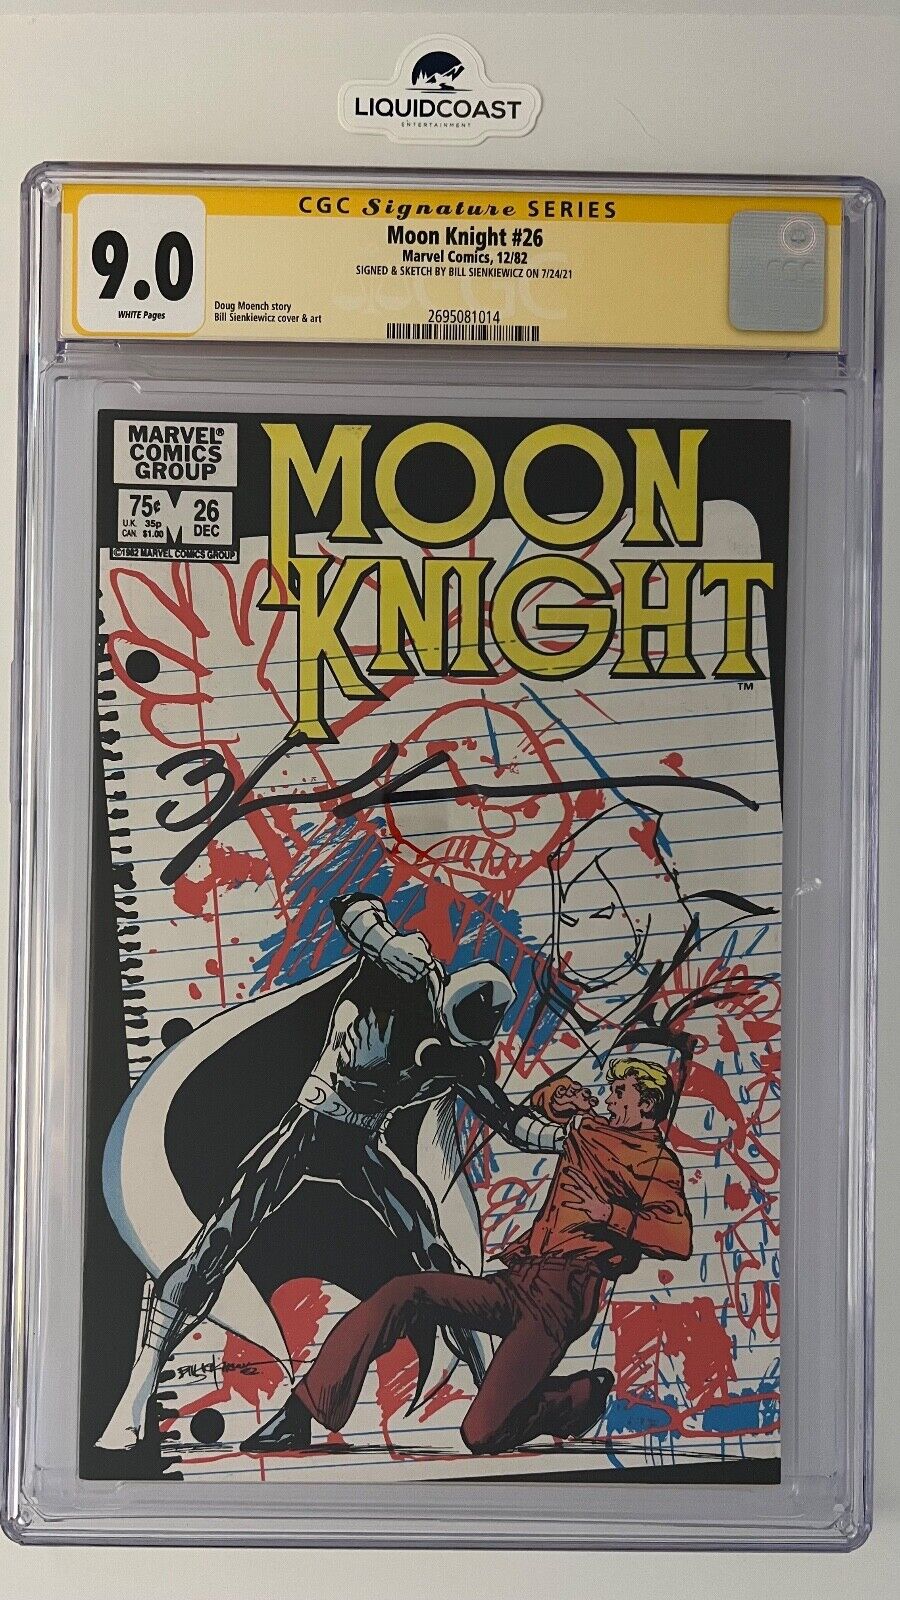 Moon Knight #26 SS CGC 9.0 SIGNED & SKETCH BY BILL SIENKIEWICZ